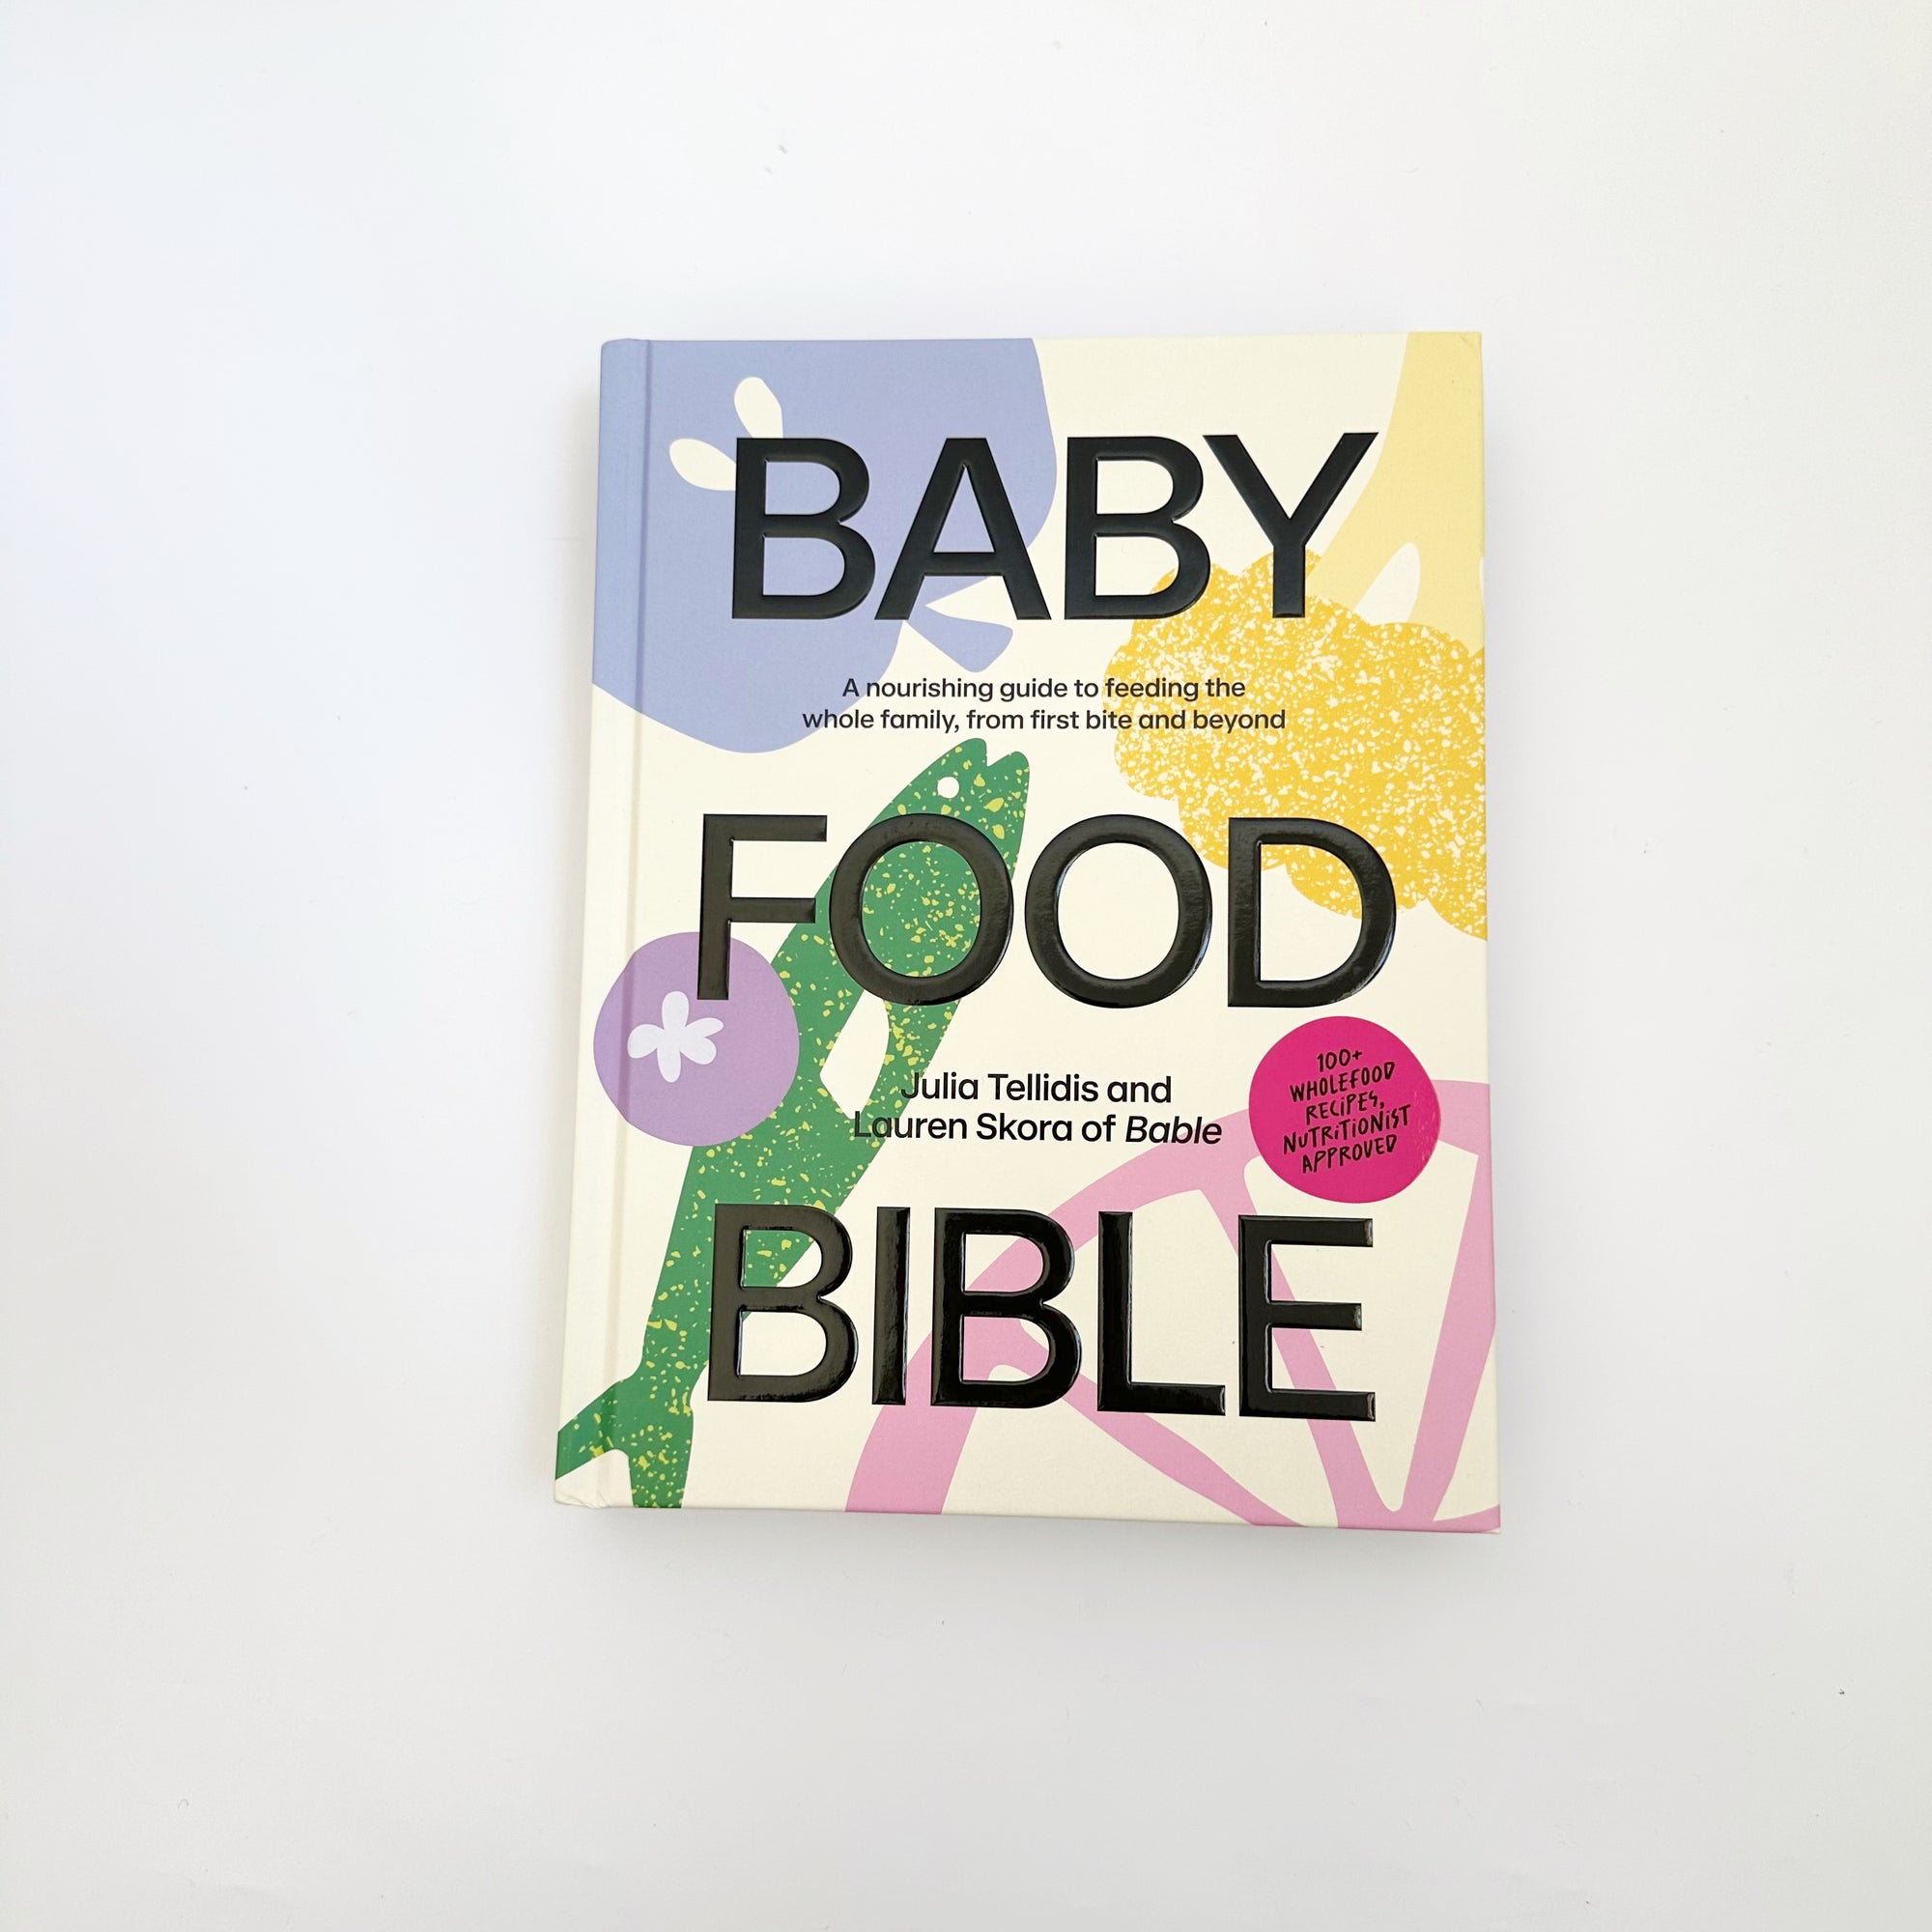 BABY FOOD BIBLE